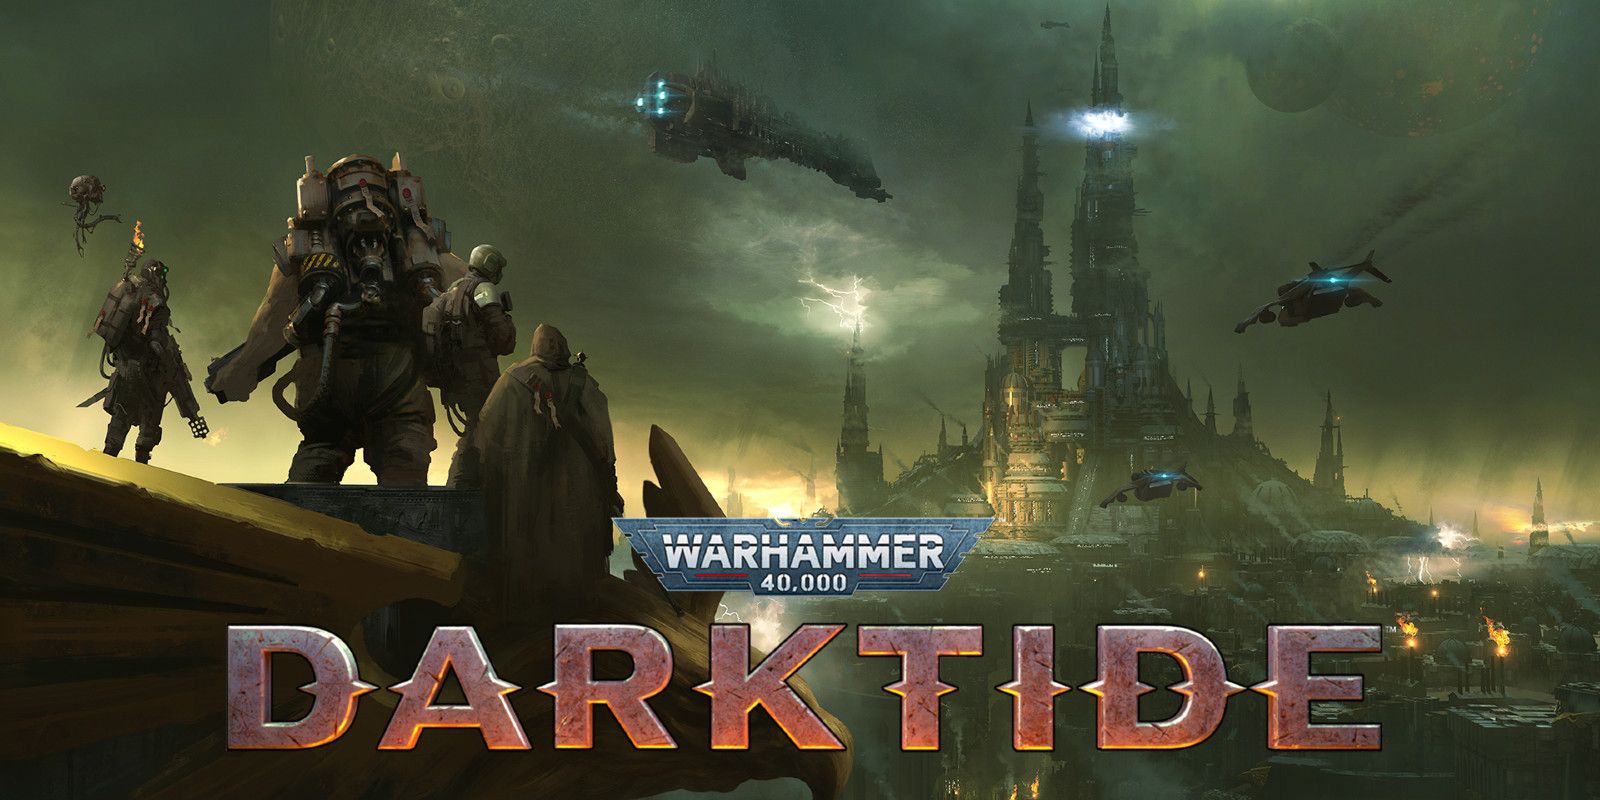 Warhammer 40K Darktide Announced, Coming From Vermintide Developers